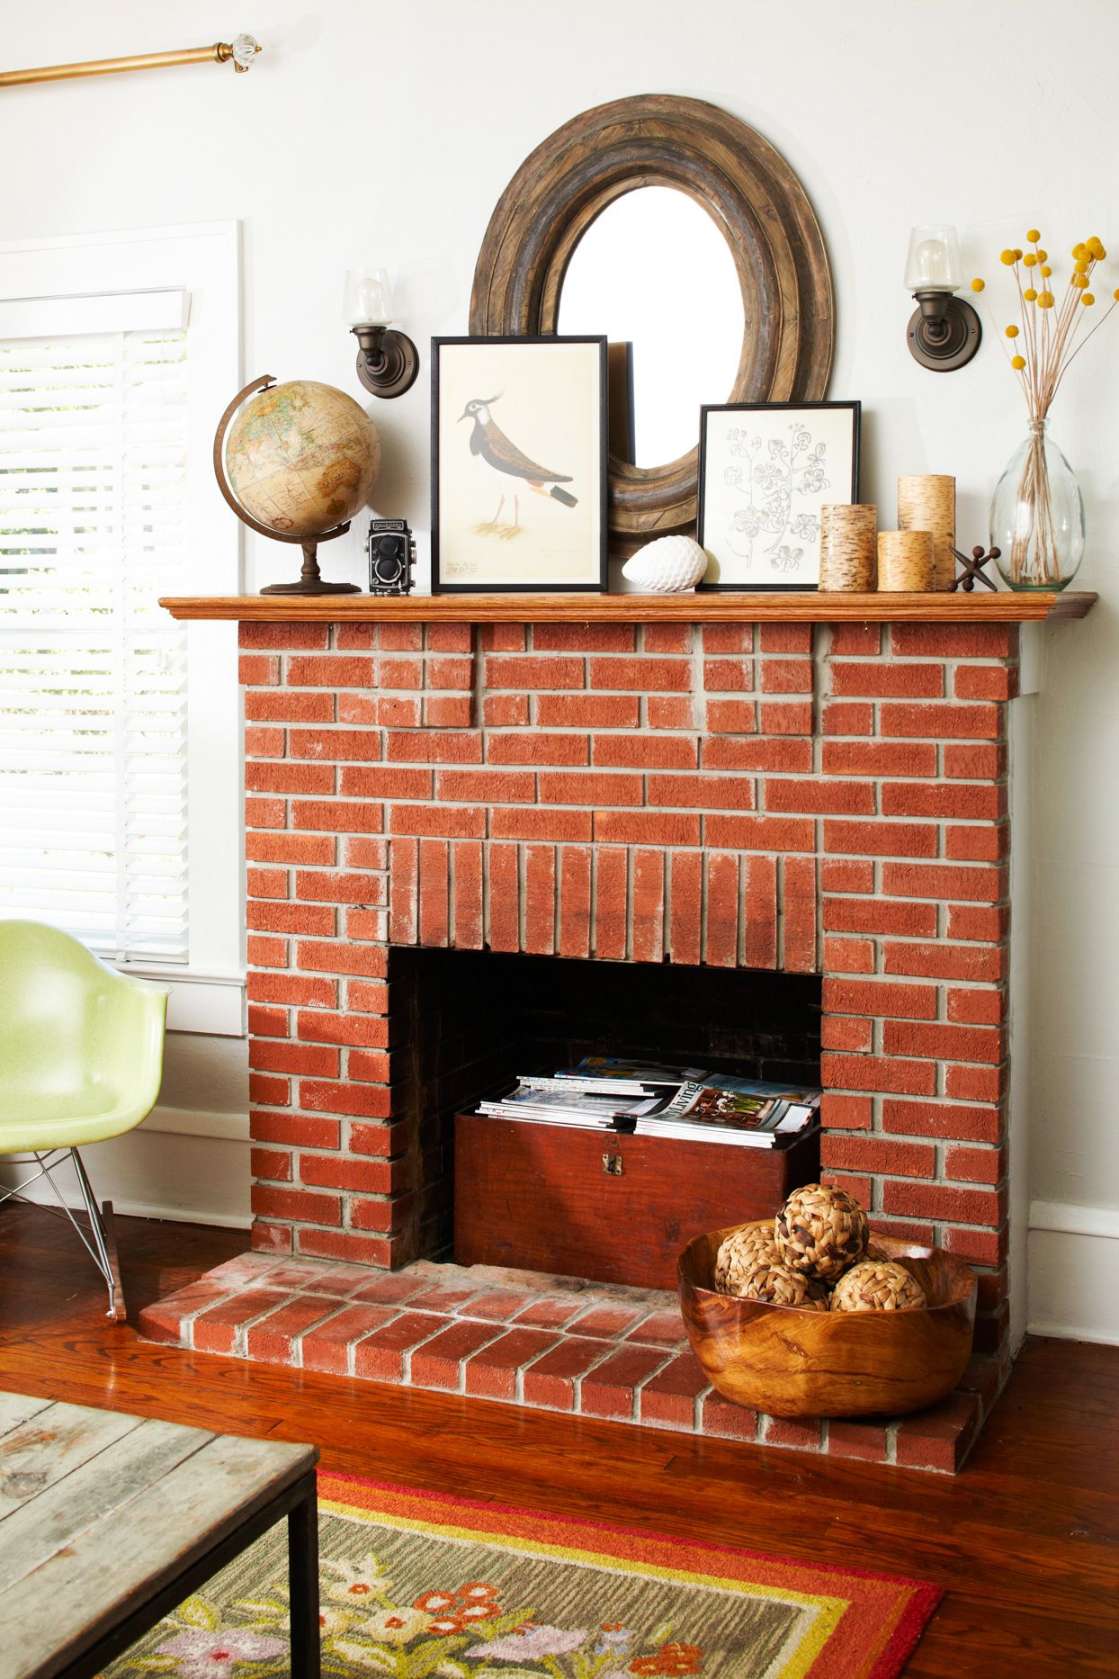 Rustic Fireplace Mantel Ideas That Make a Room Feel Warmer